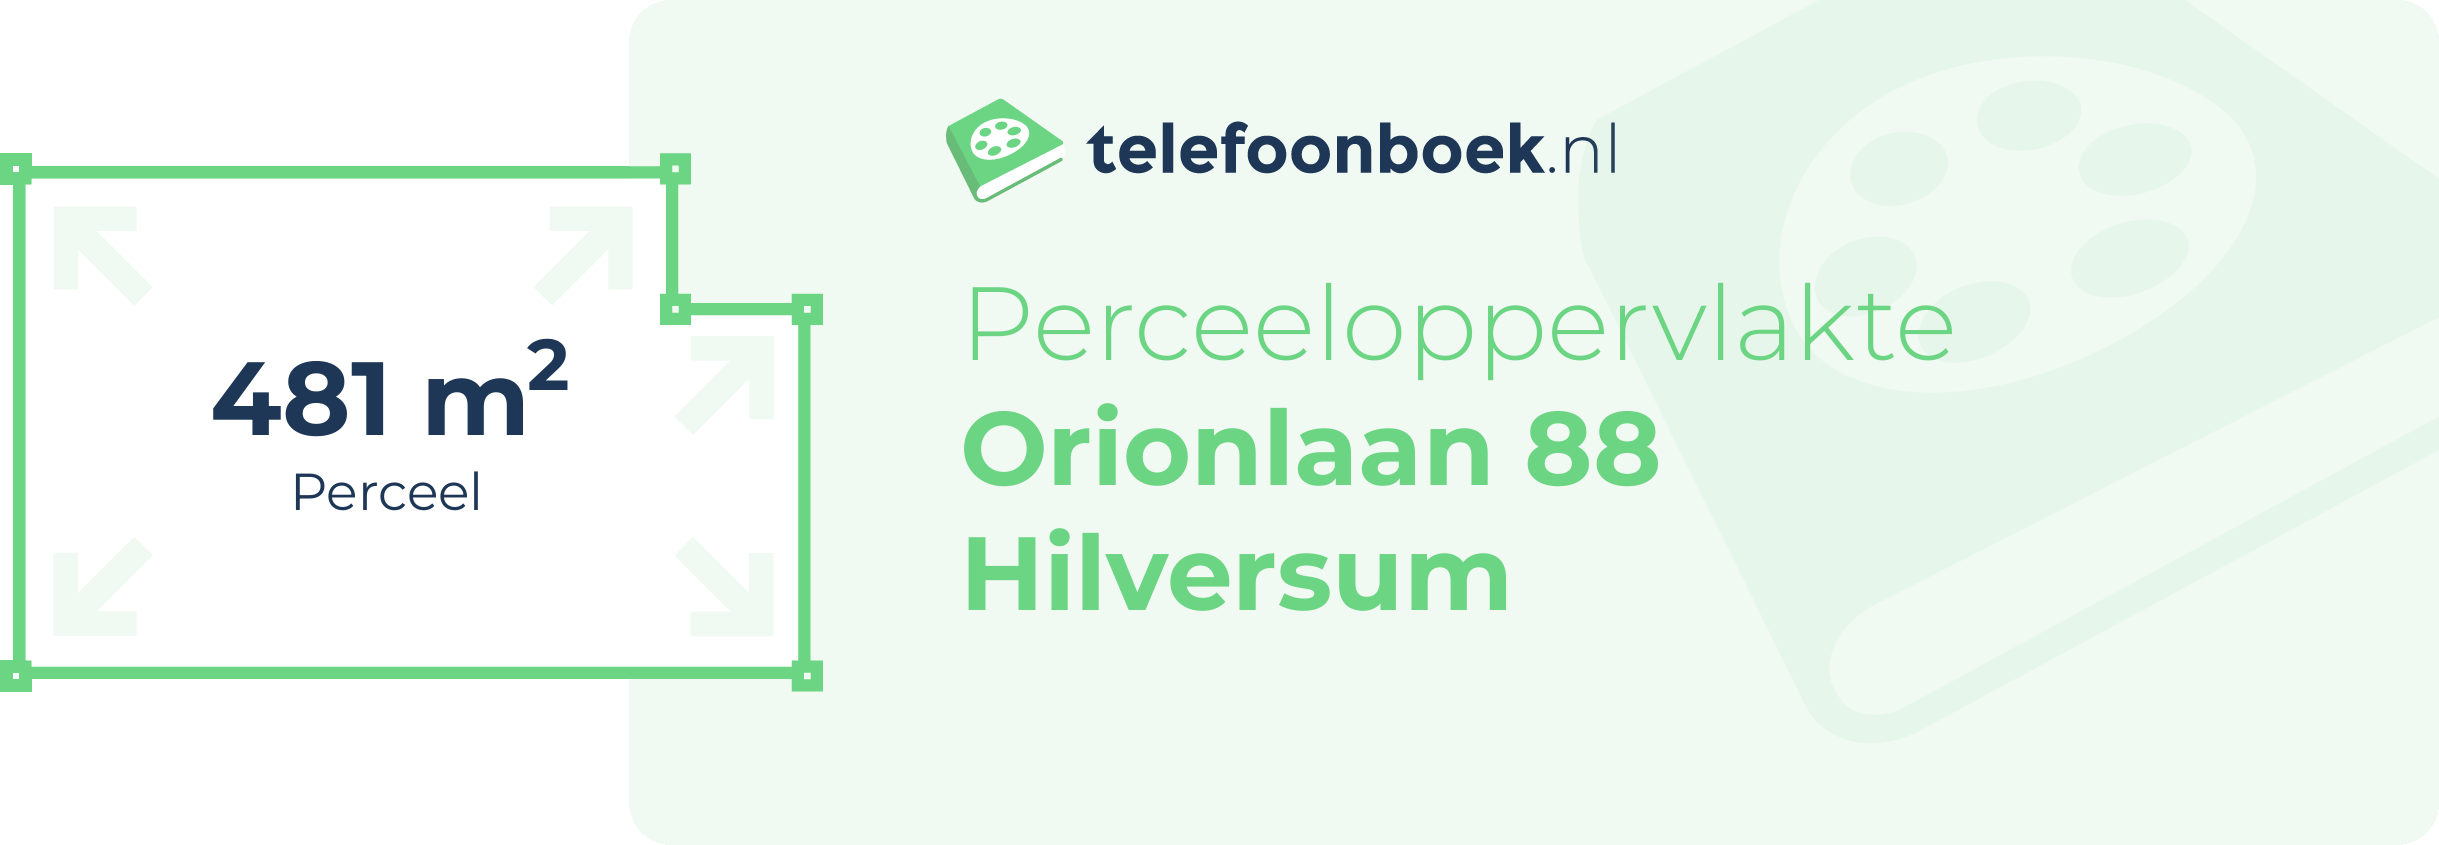 Perceeloppervlakte Orionlaan 88 Hilversum